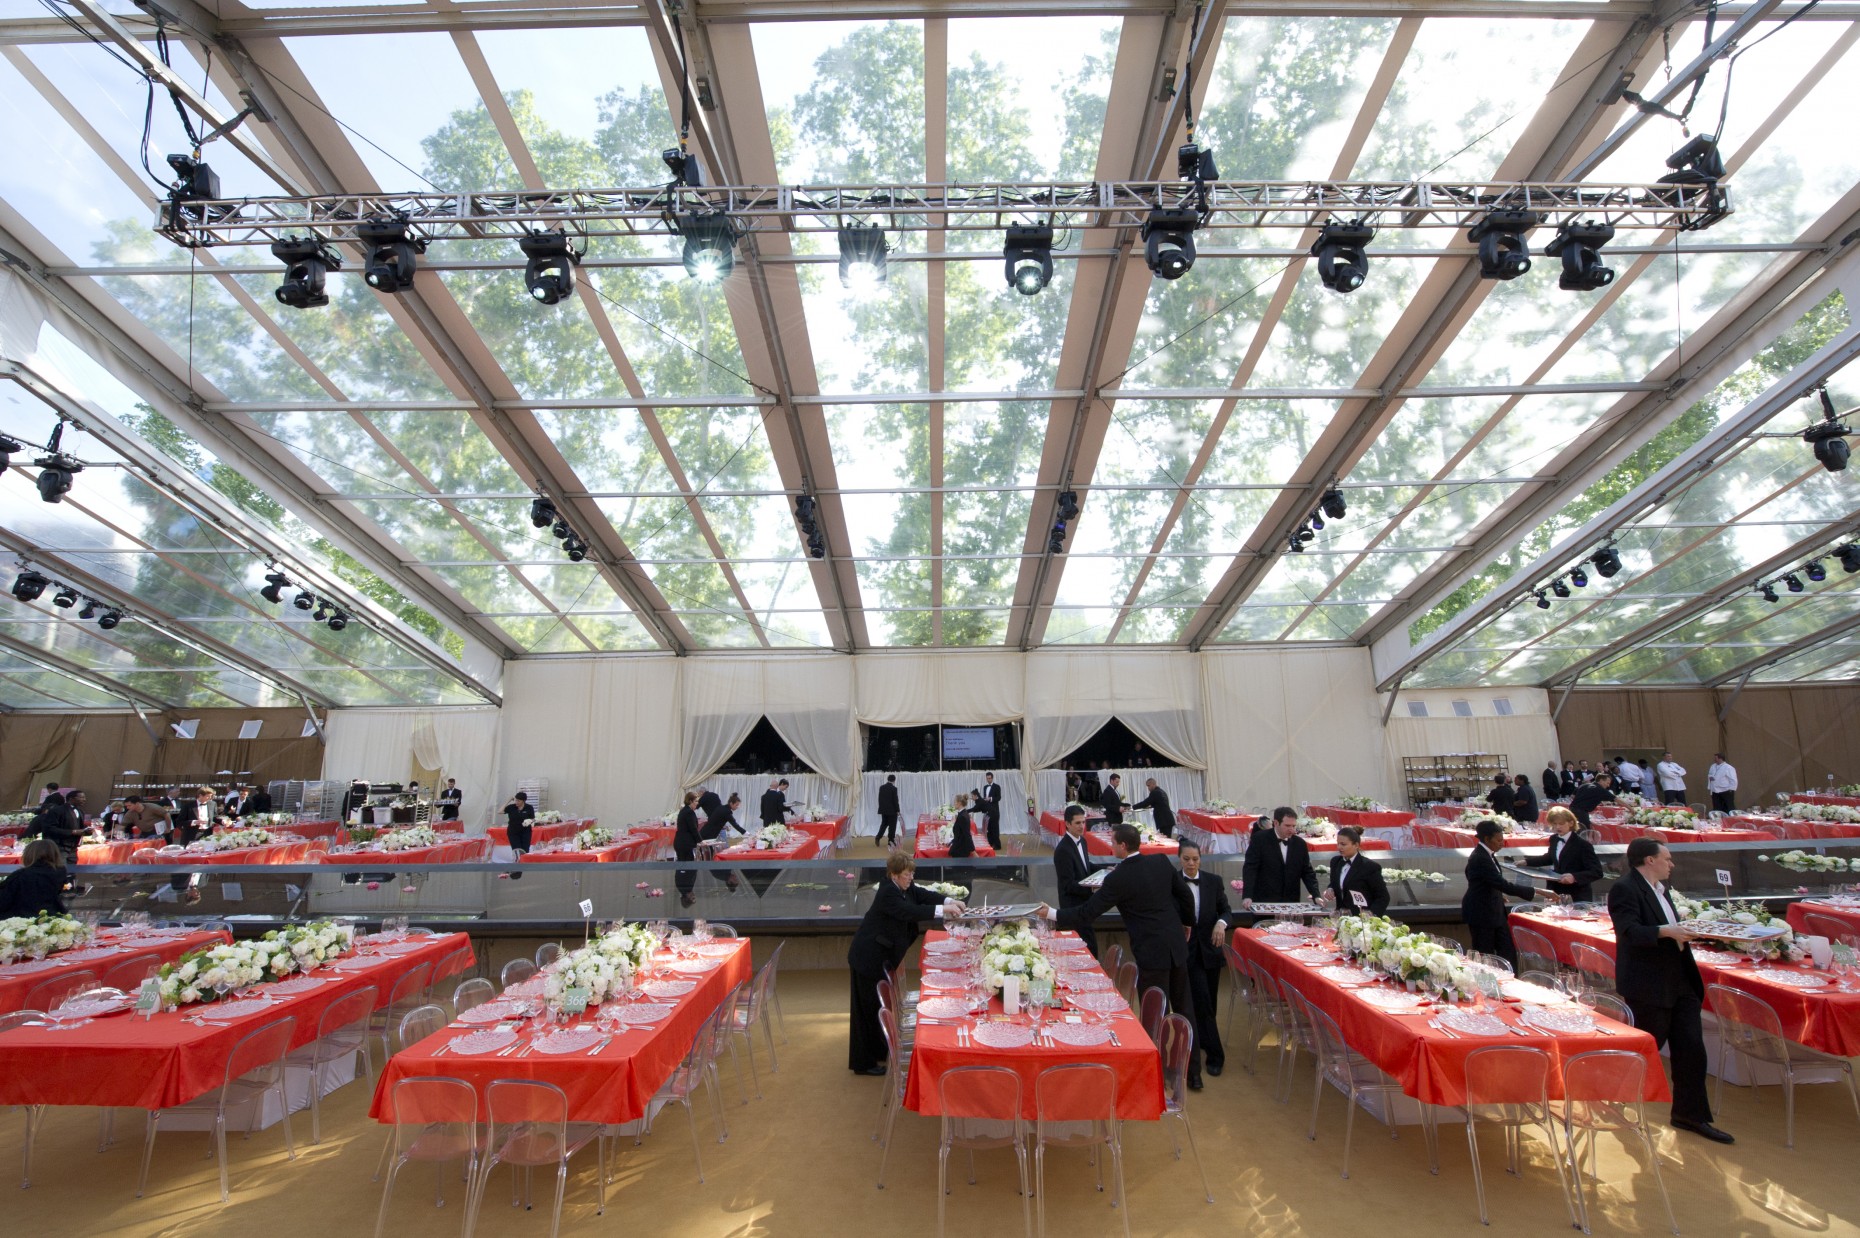 Long Feast Tables Orange Parties Evantine Design Barnes Museum